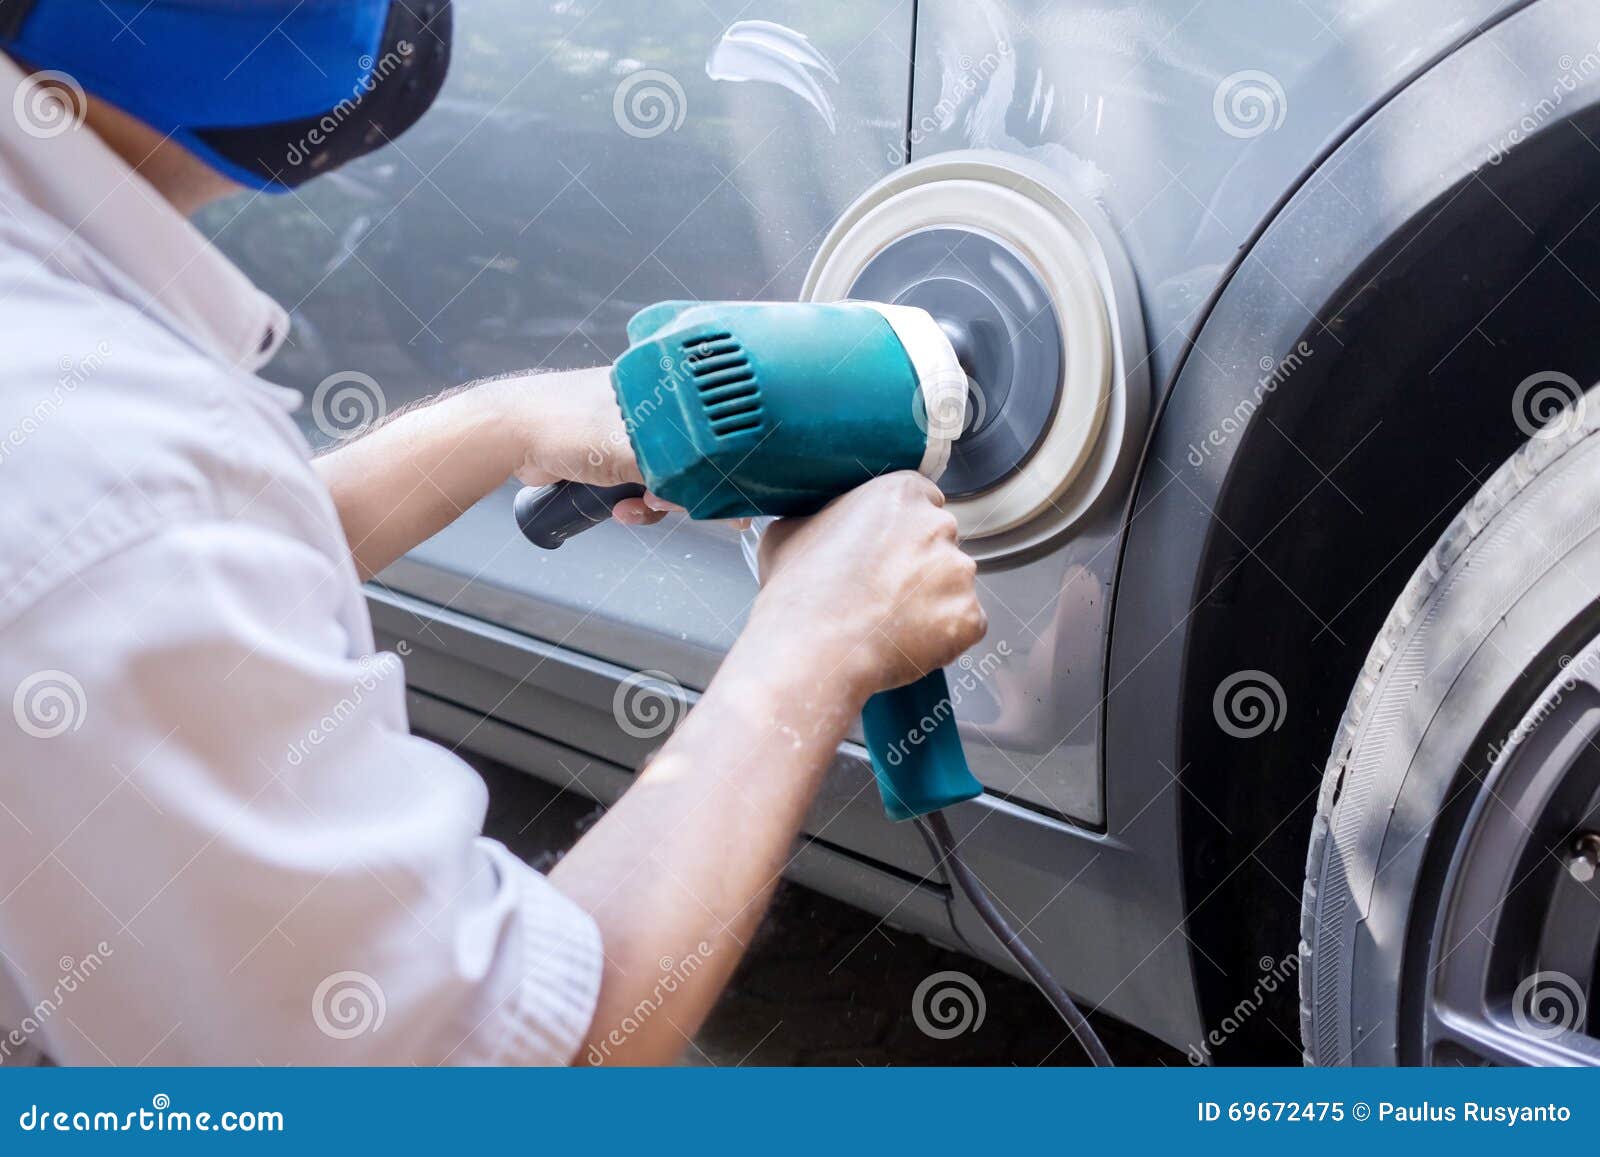 worker polish a car with auto polisher